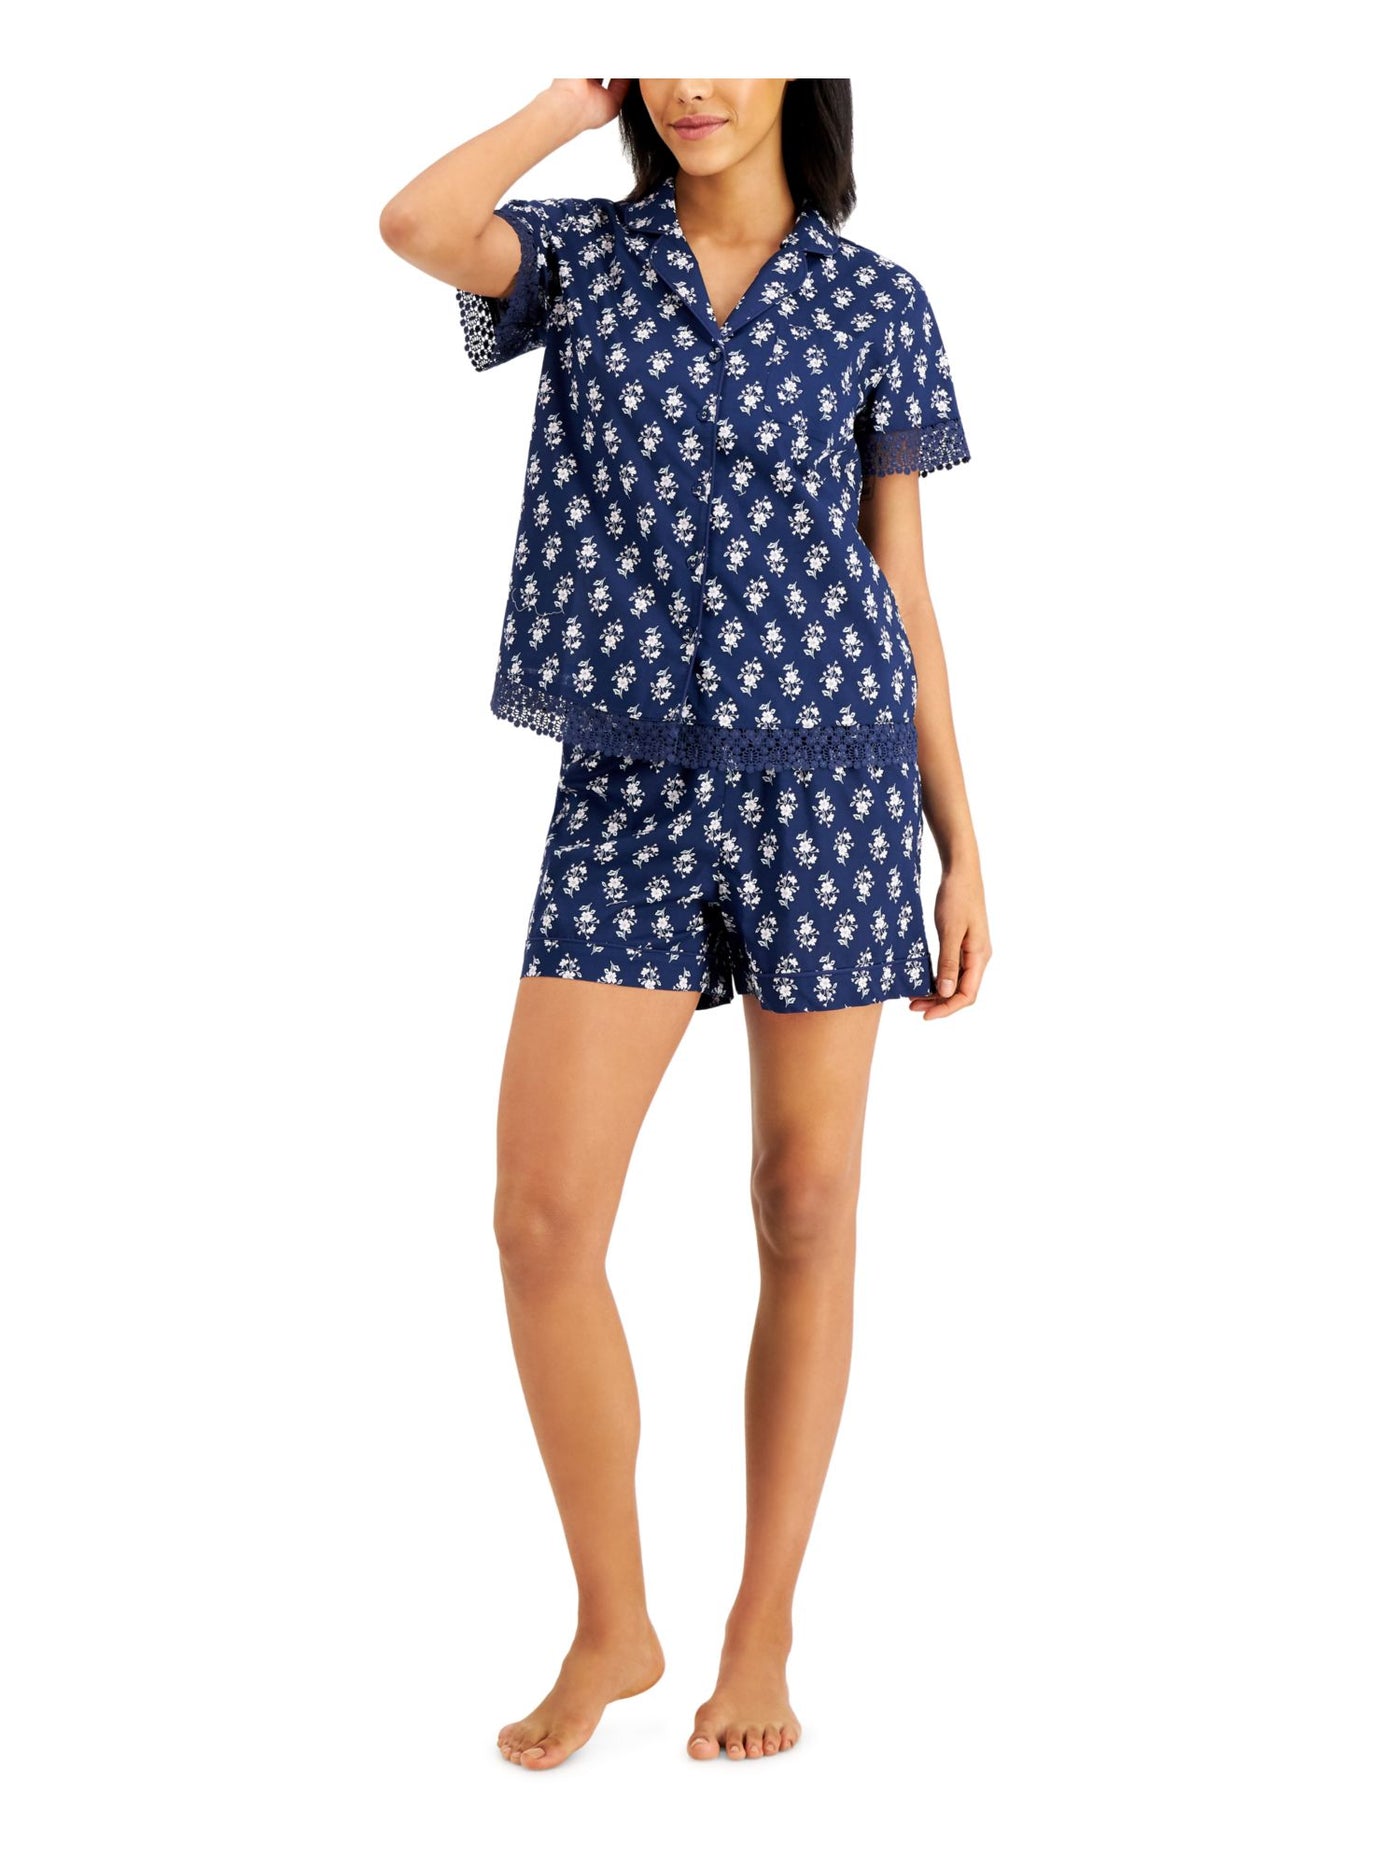 CHARTER CLUB INTIMATES Intimates Navy Notch Collar Pocketed Floral Sleep Shirt Pajama Top XXL